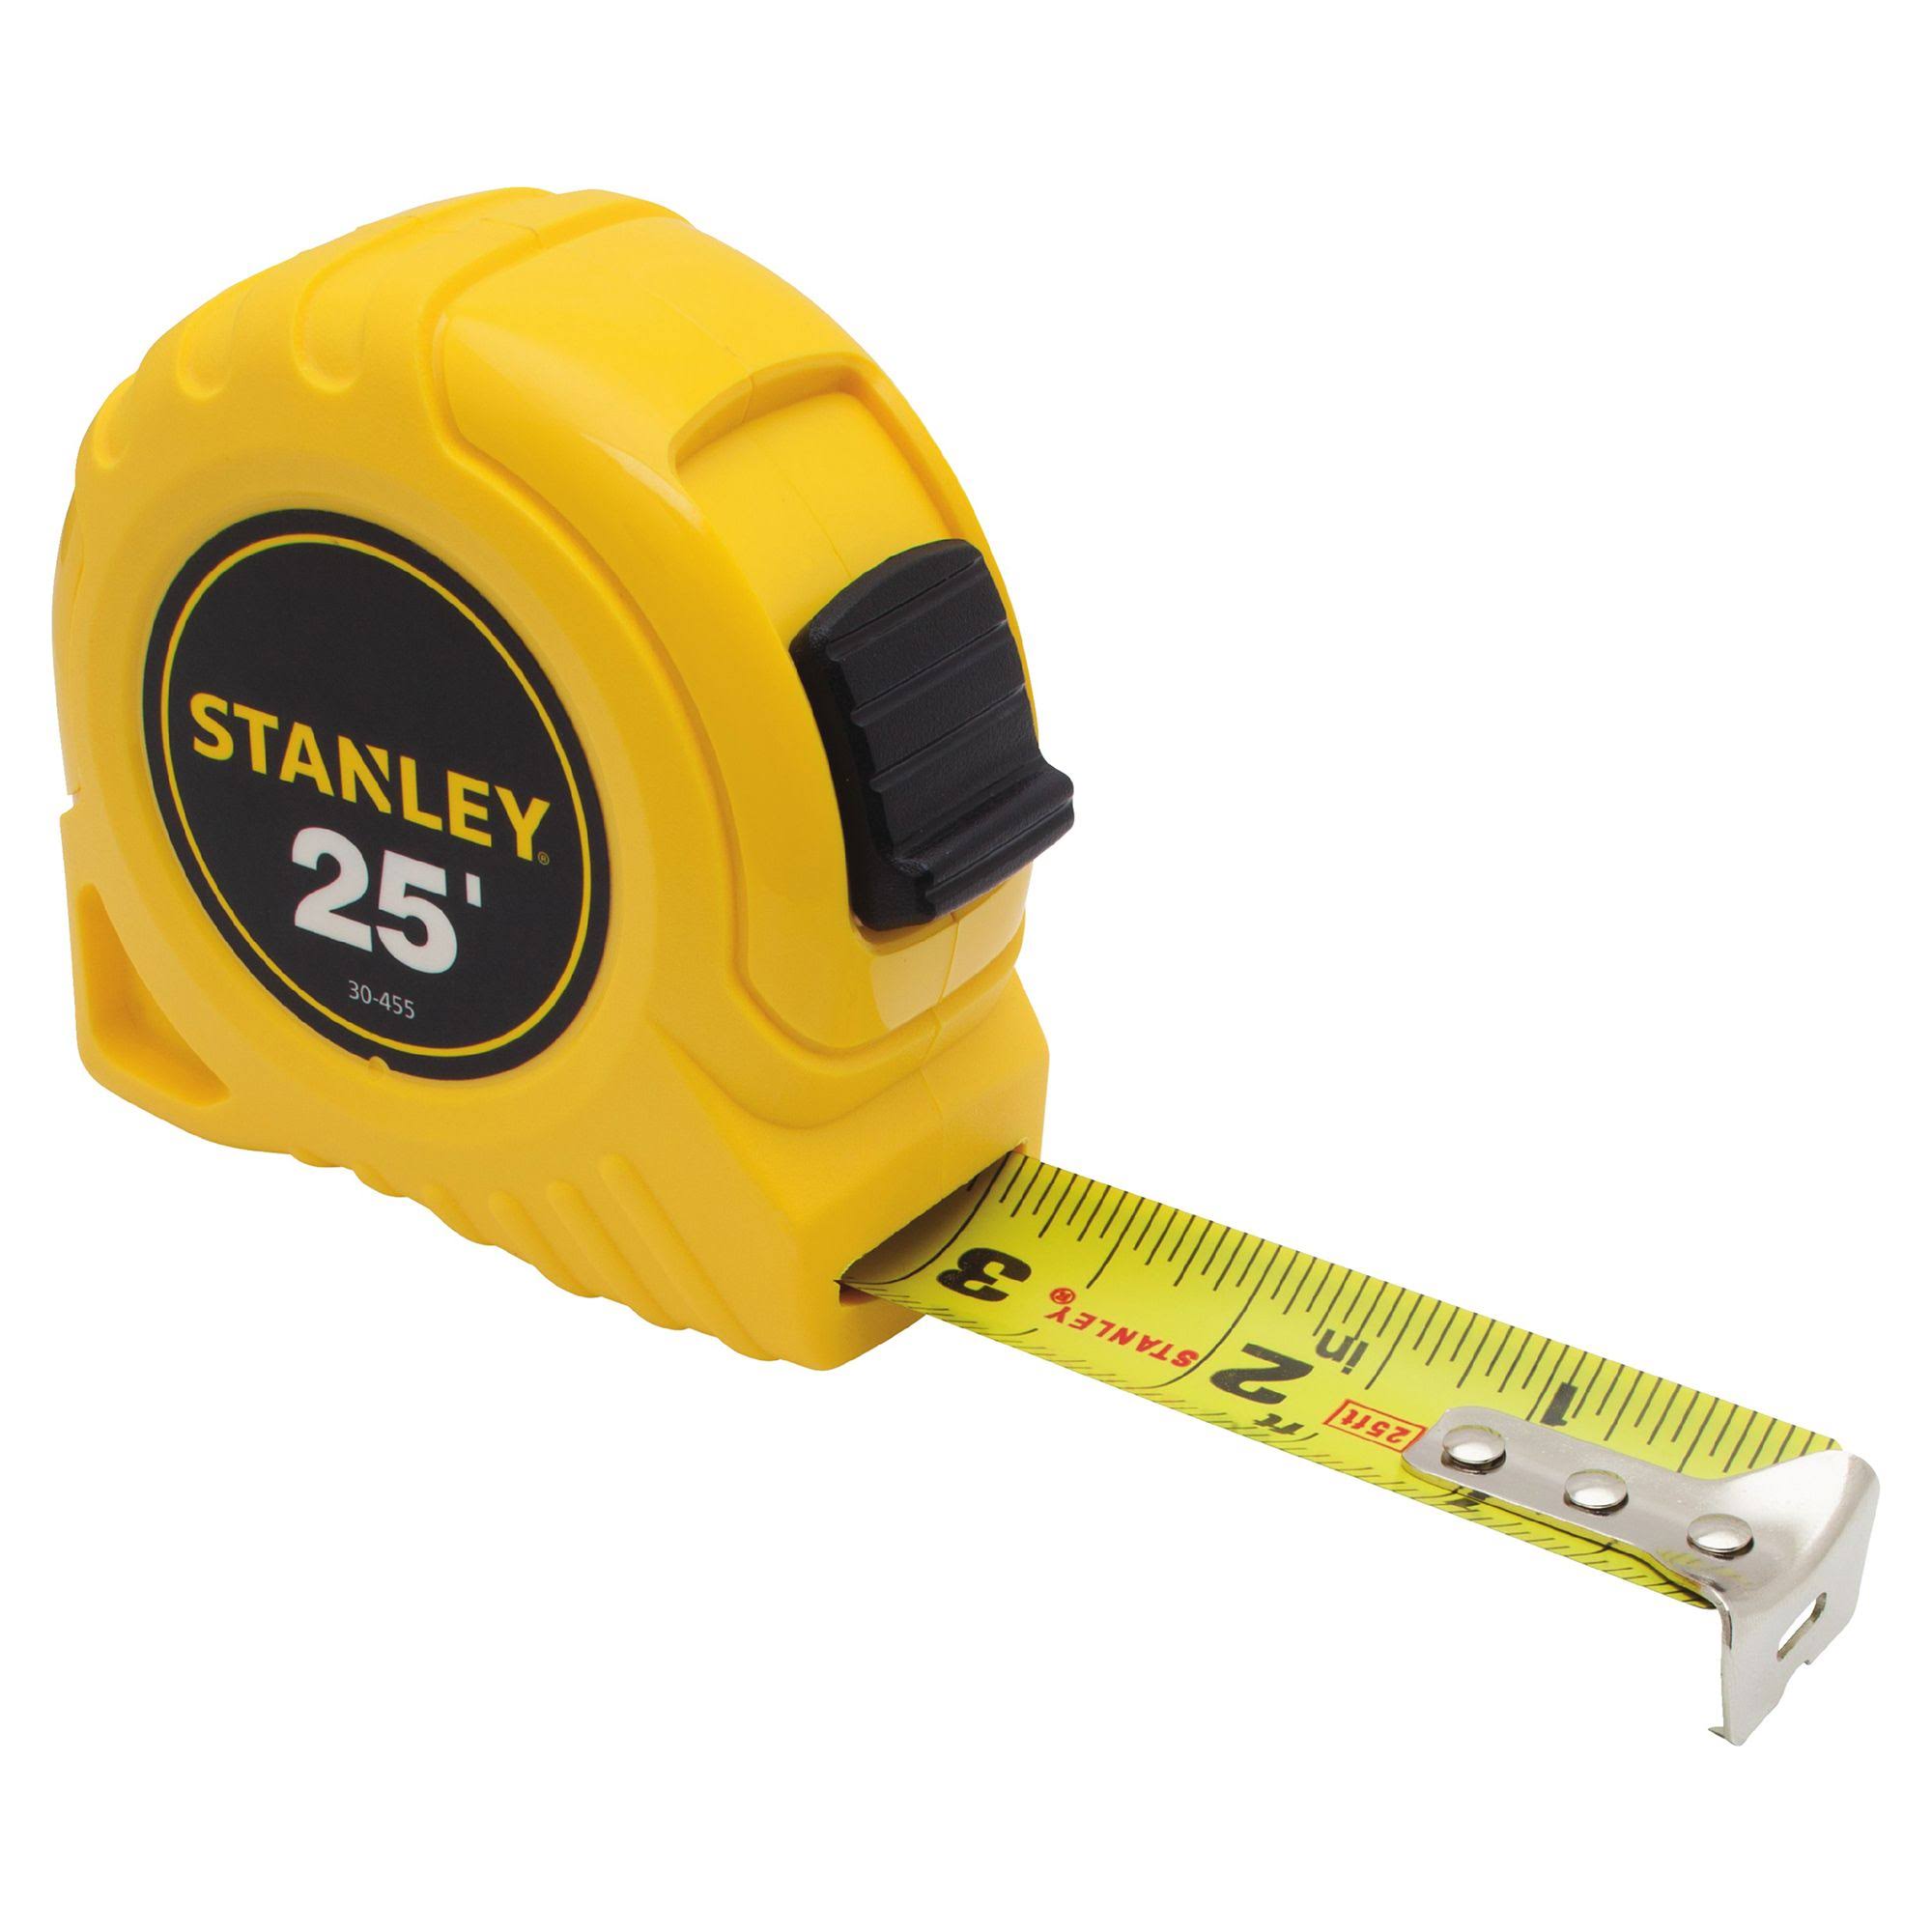 Stanley Tape Measure - Yellow